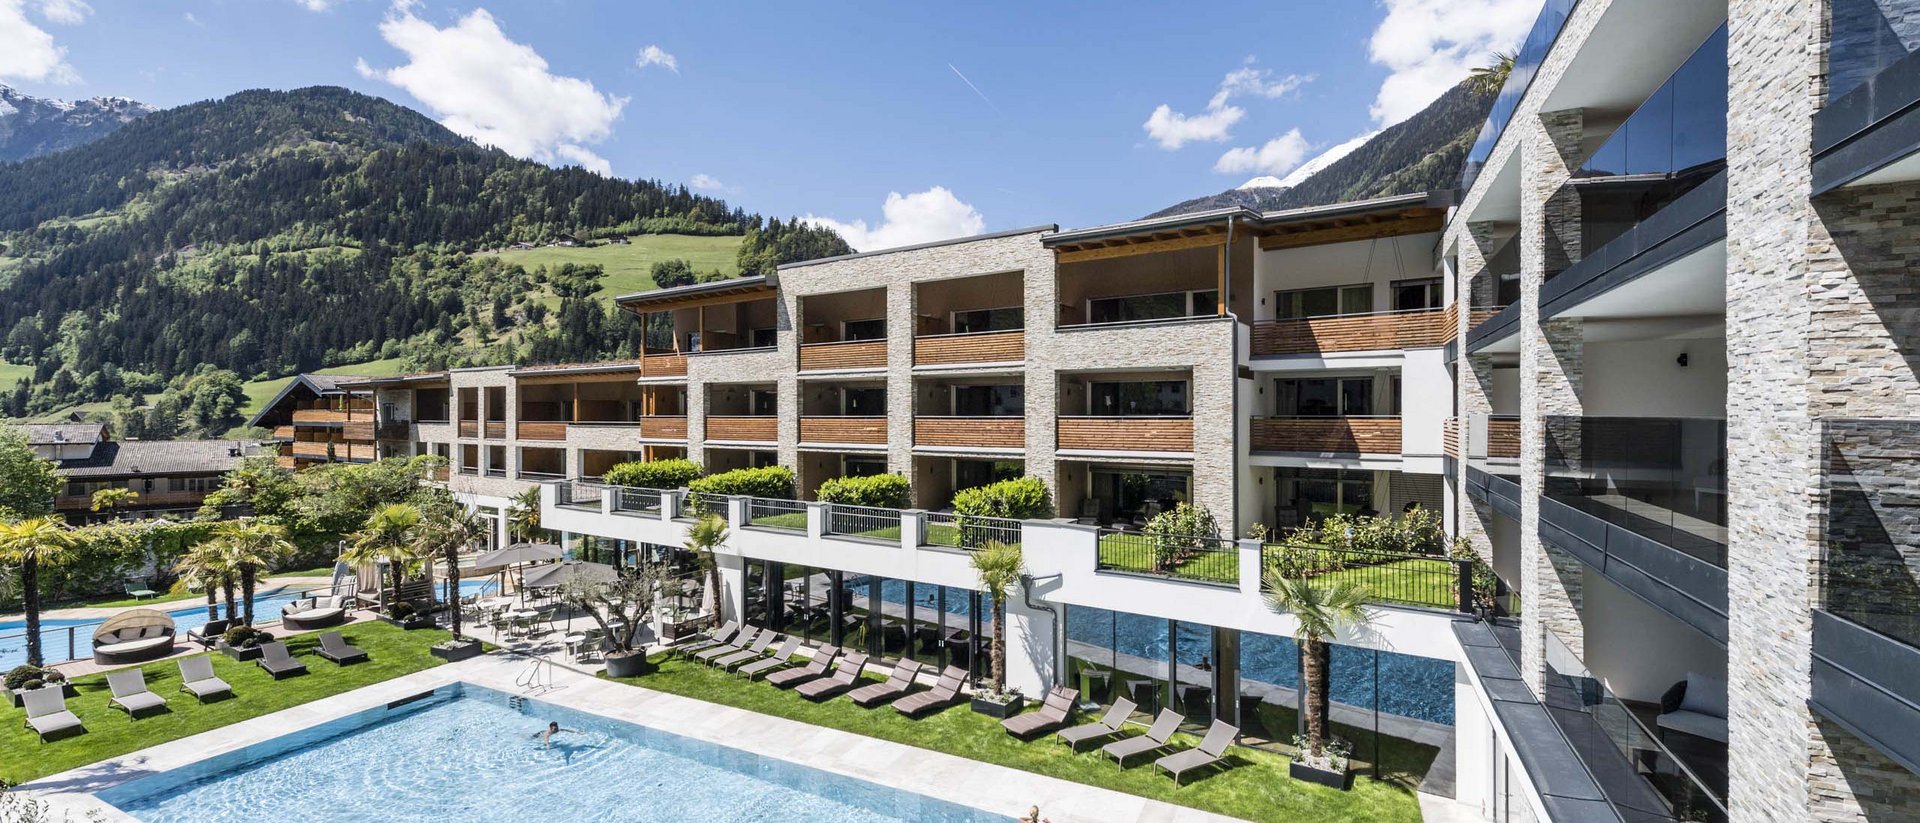 Hotel in Val Passiria/Passeiertal with 4 stars